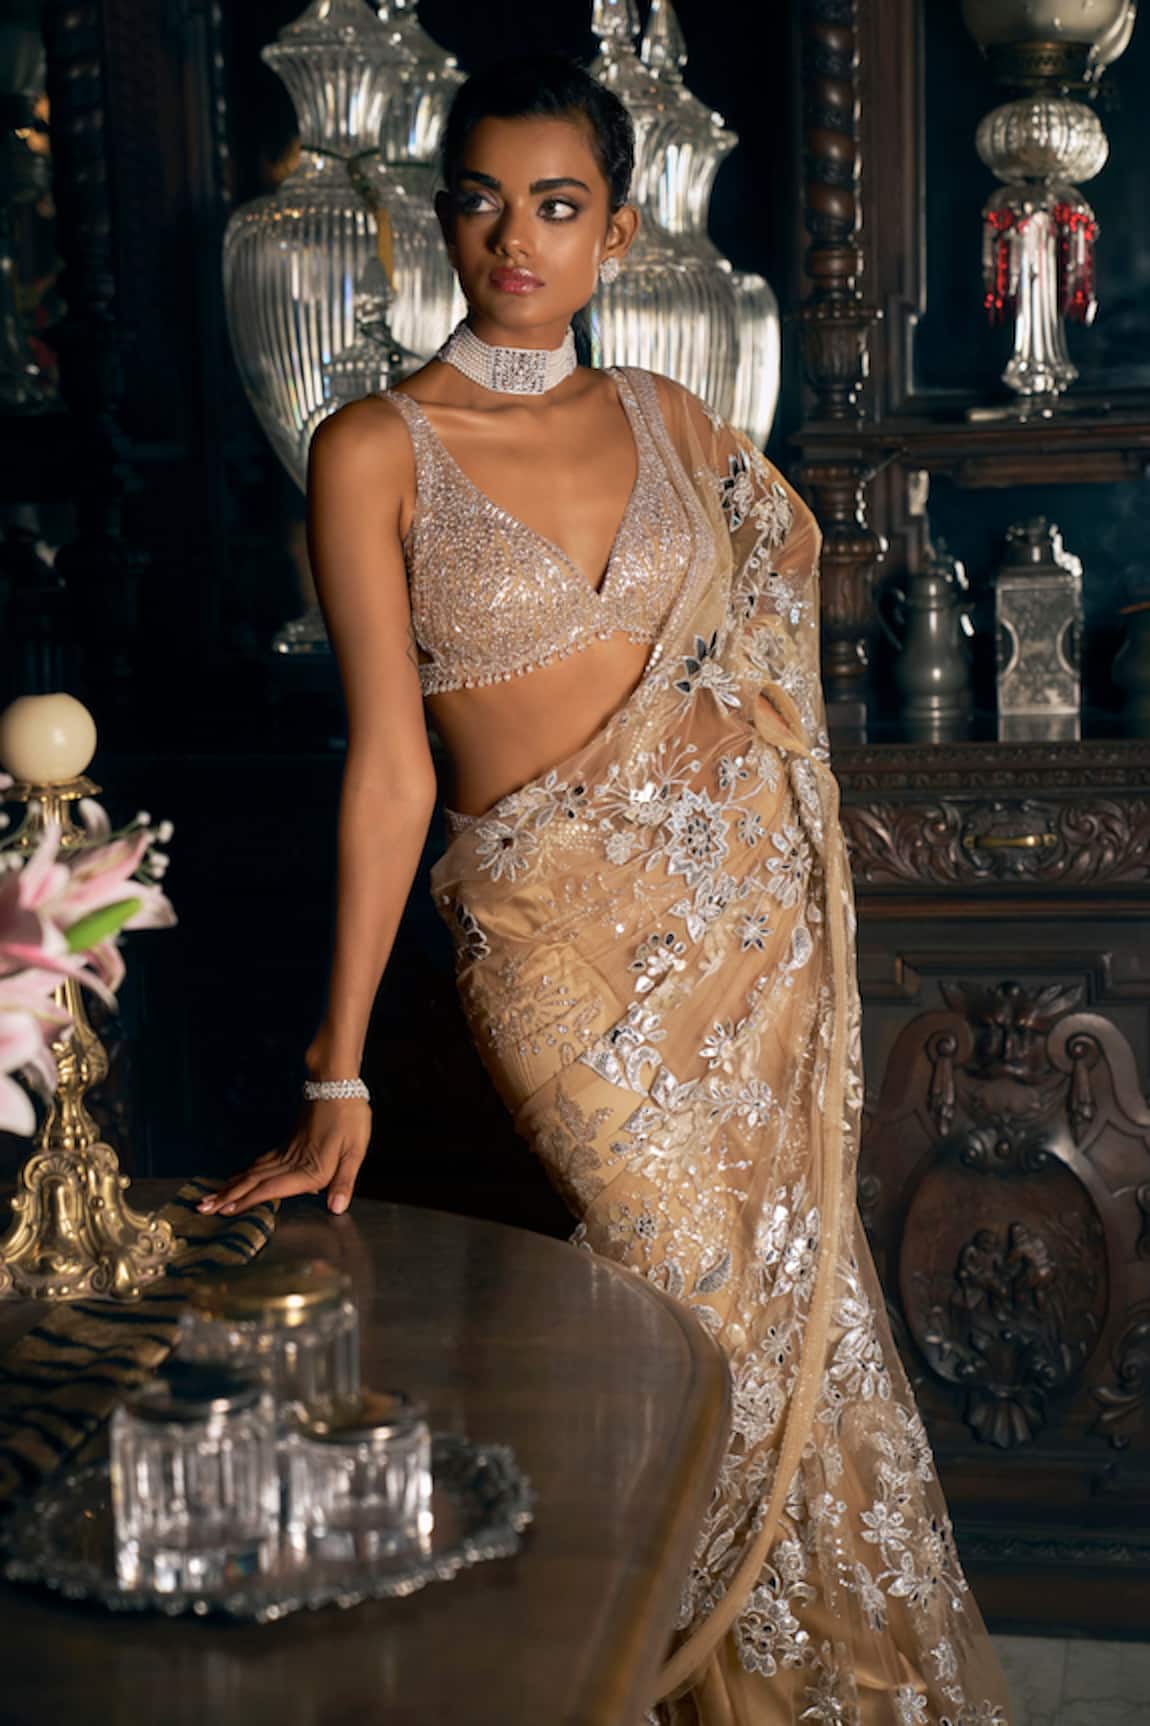 Lehenga Style Sarees - The Best Choice of a Modern Indian Bride – Lashkaraa